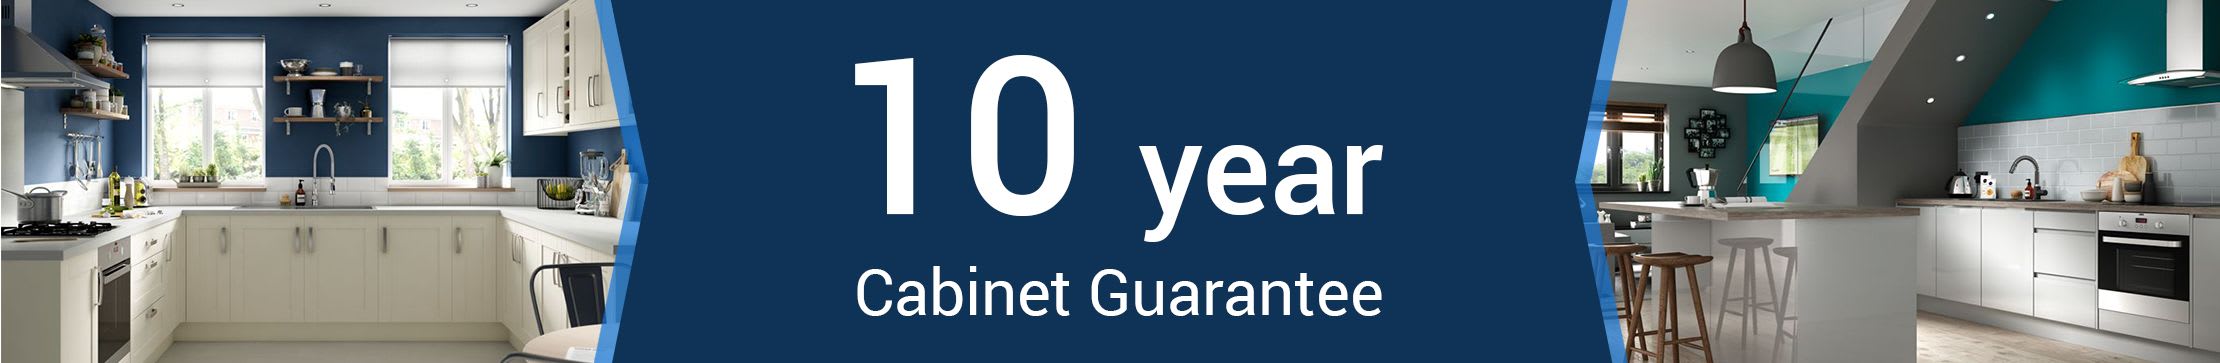 10 year cabinet guarantee